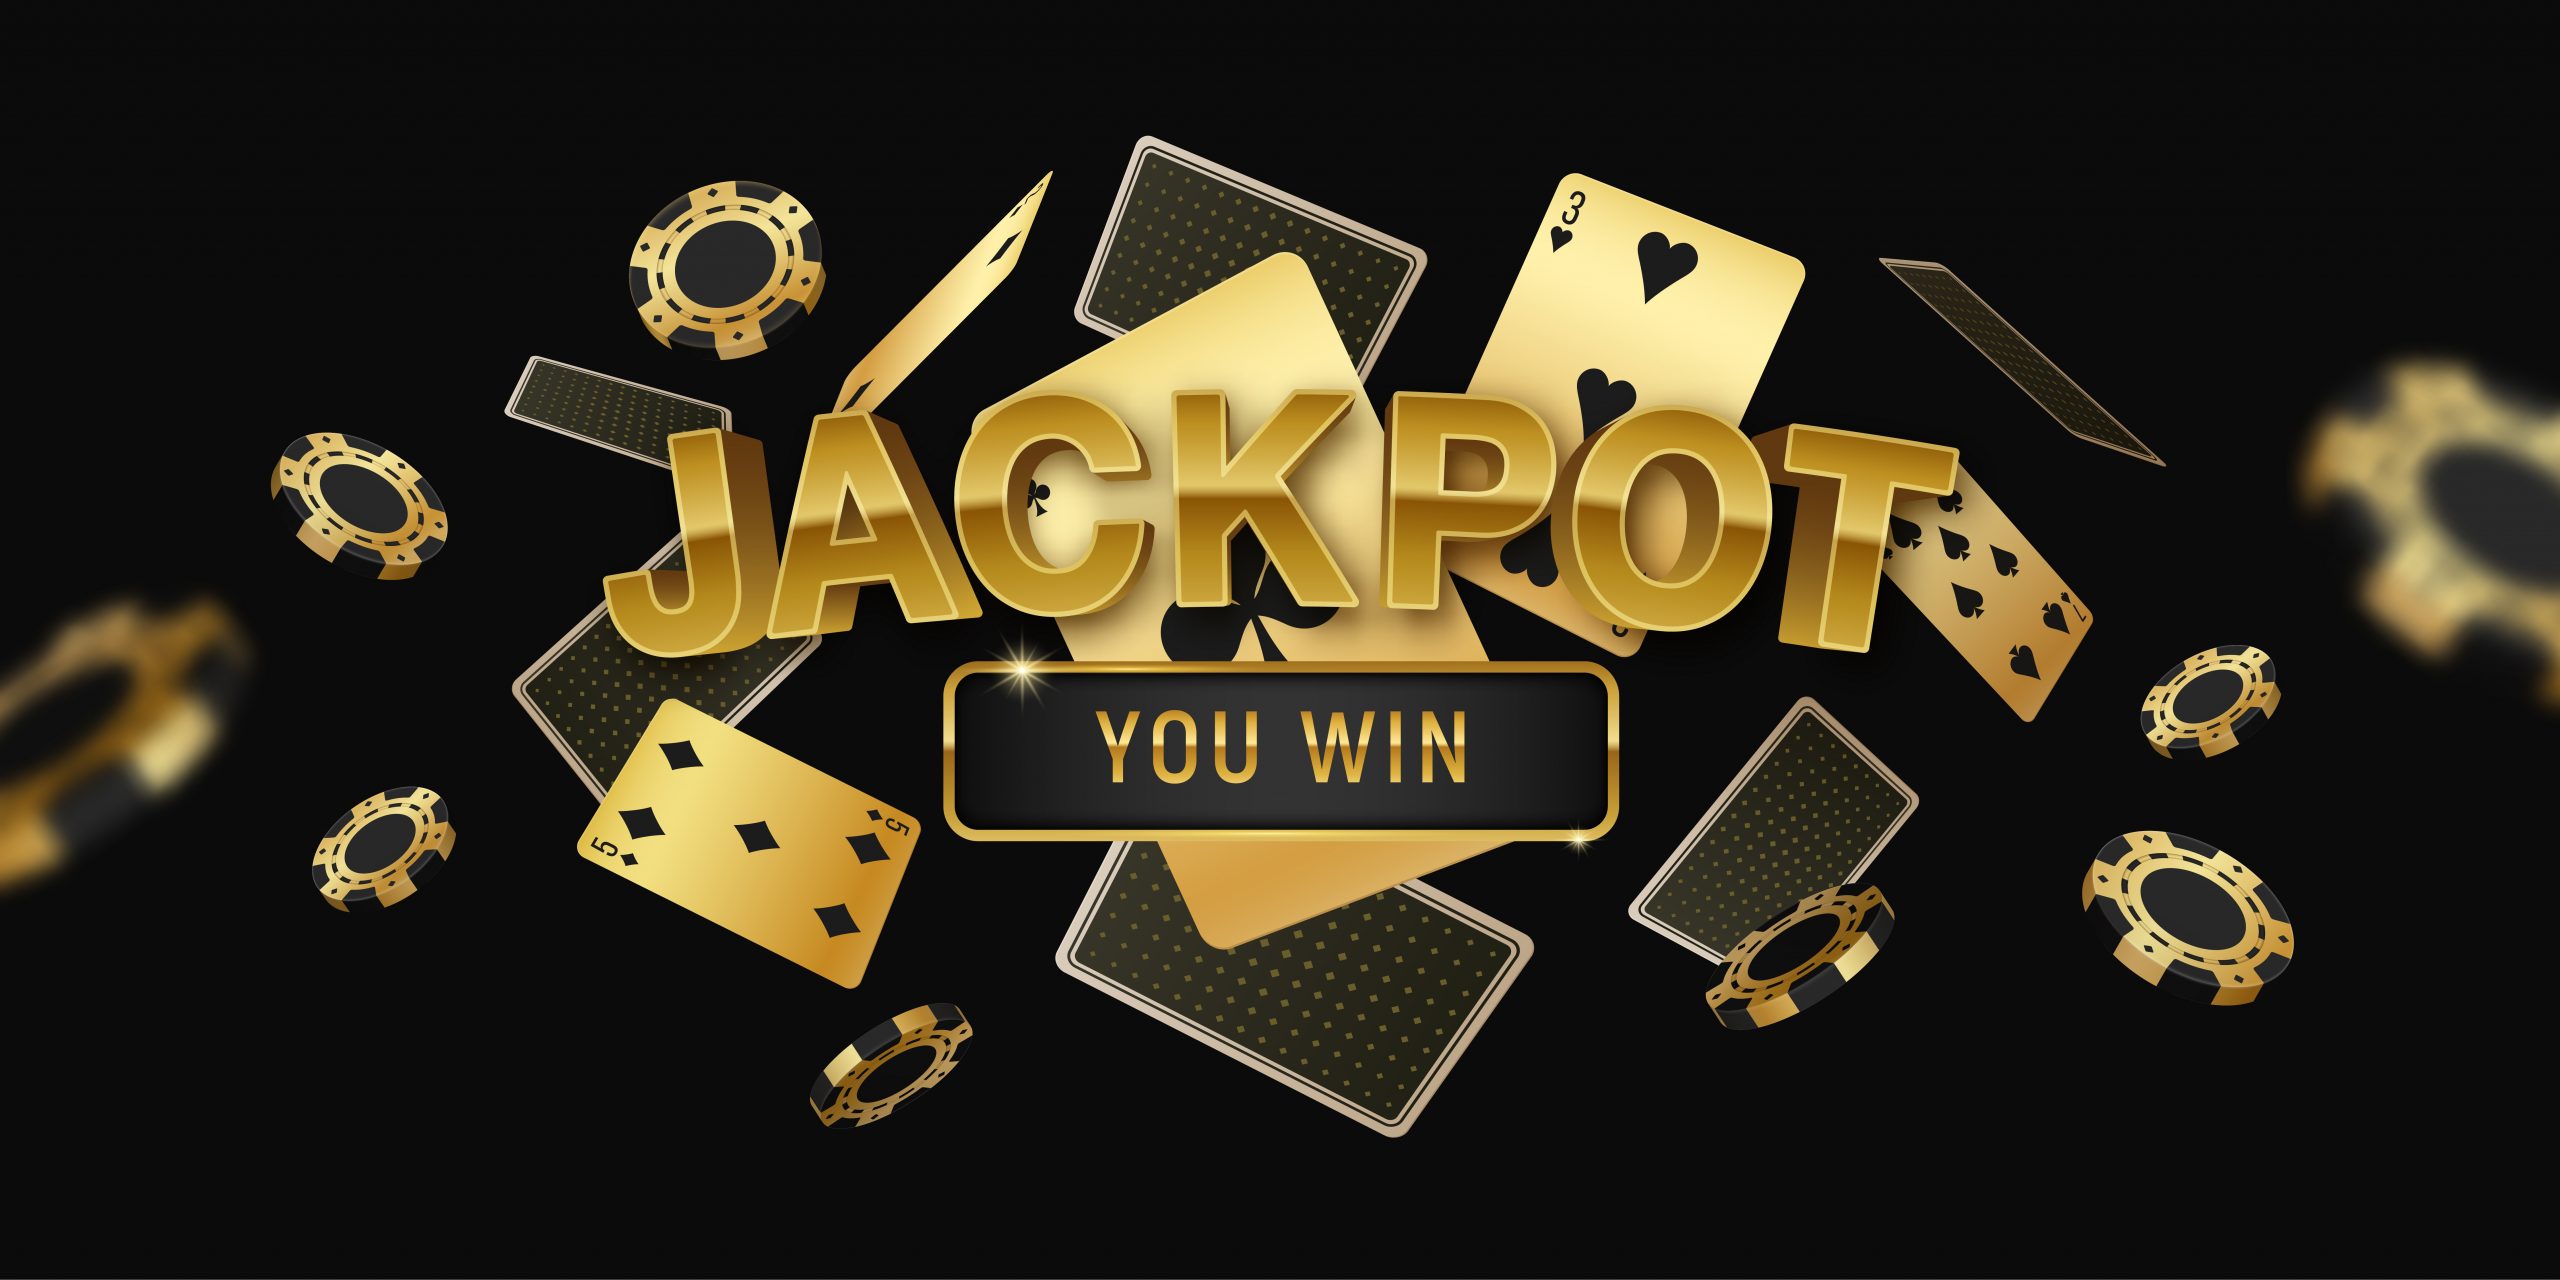 Jackpot Poker Horizontal Banner